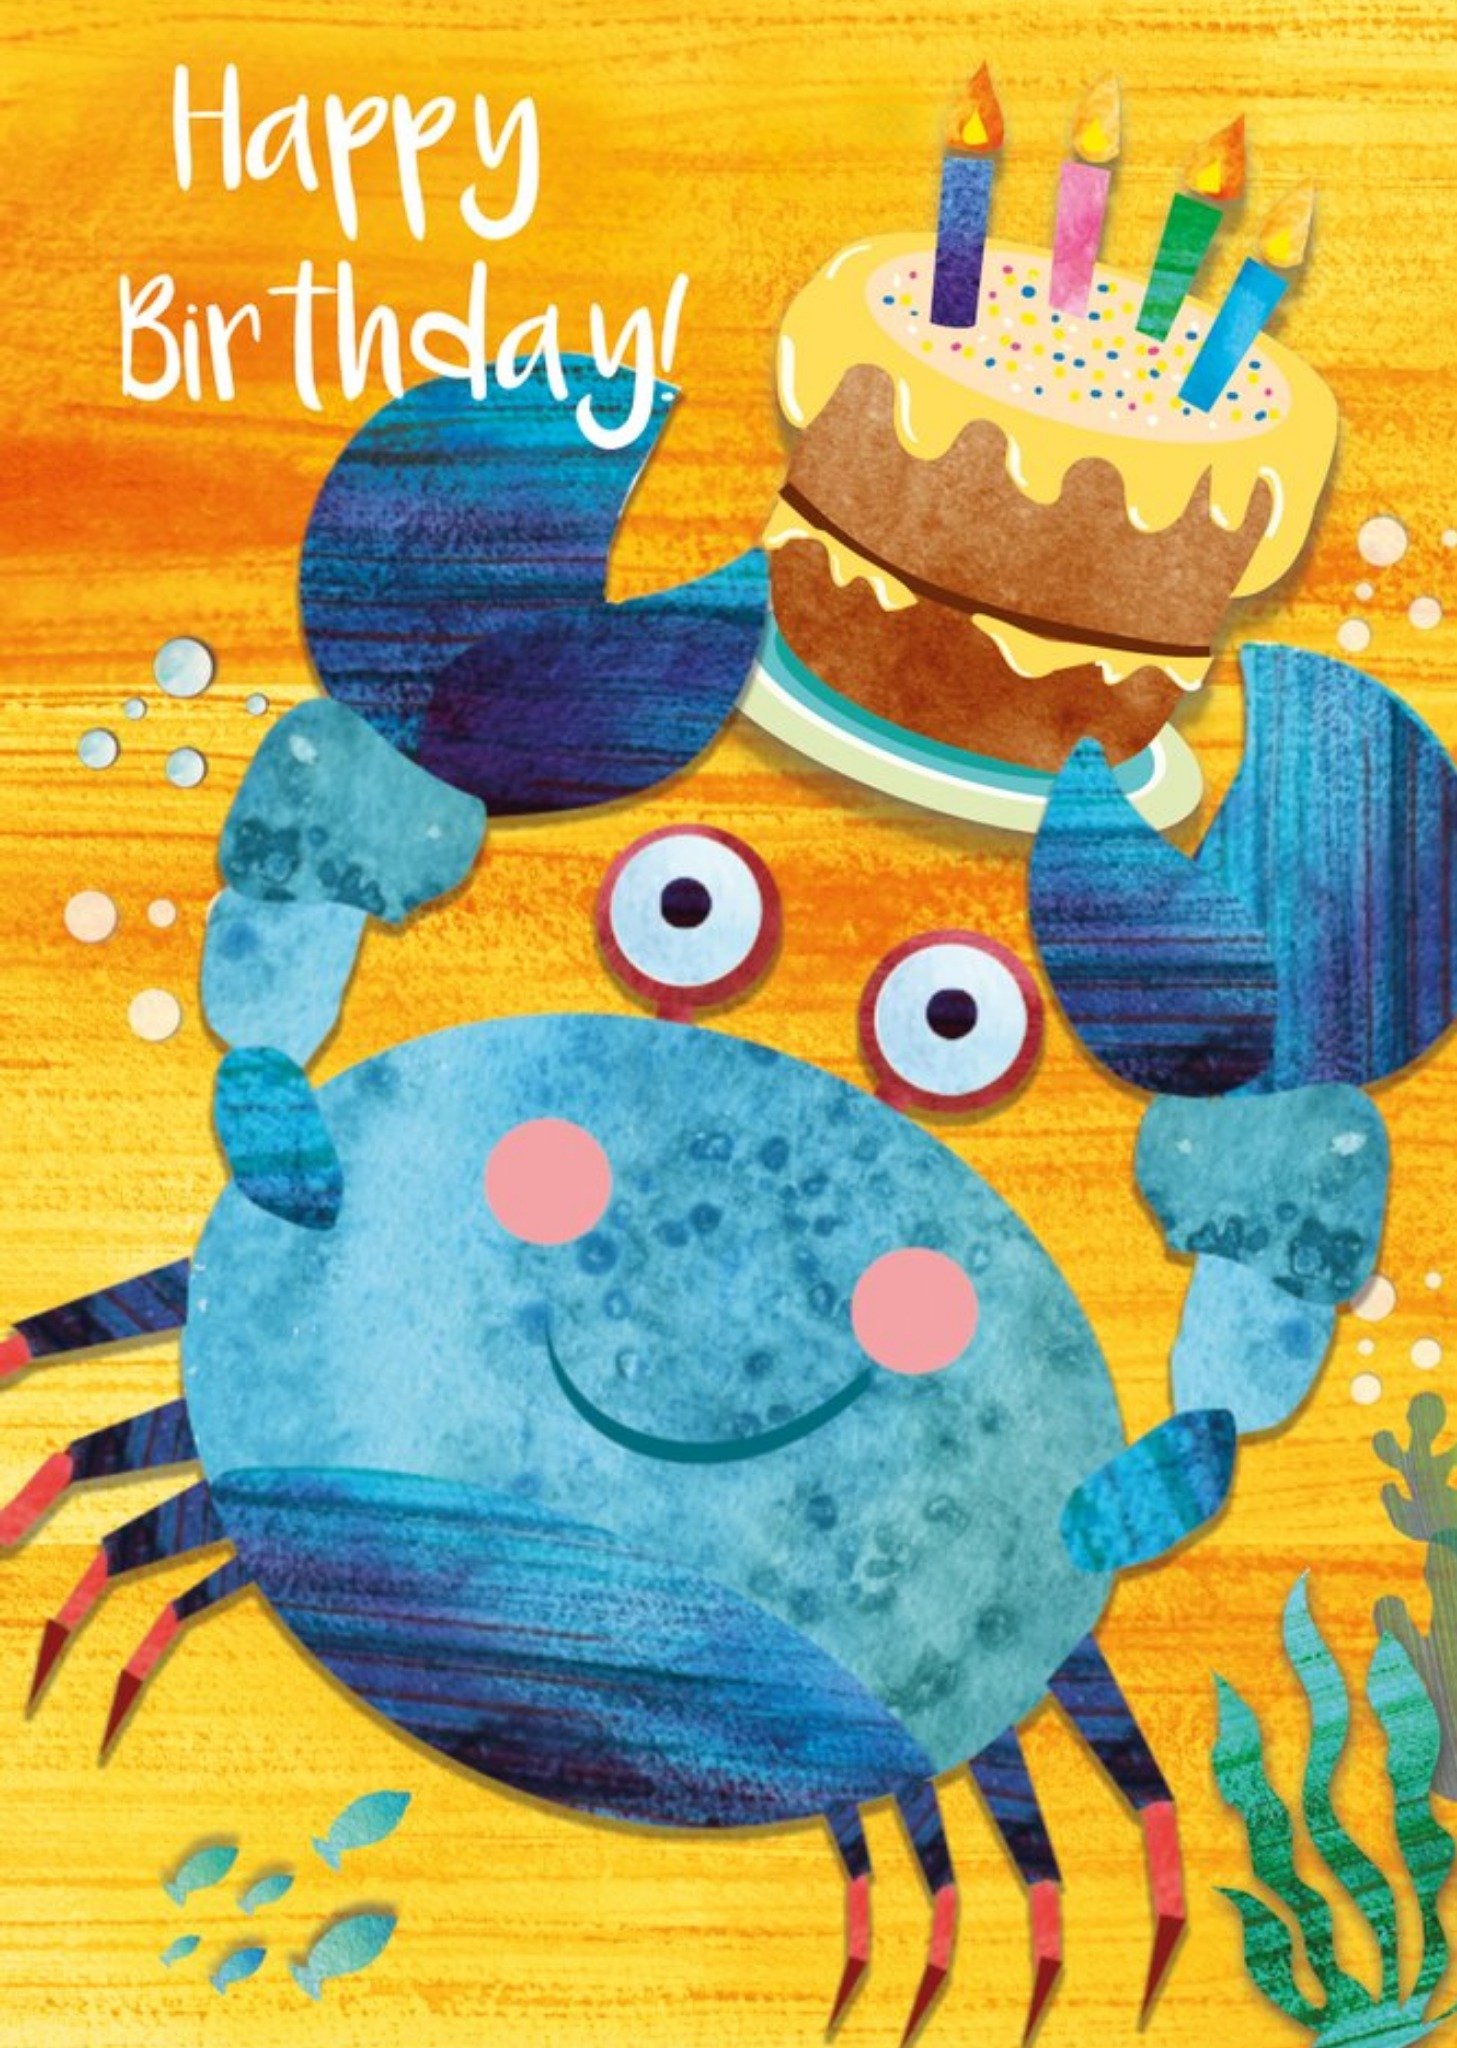 Moonpig Cute Crab Holding Cake Birthday Card, Large